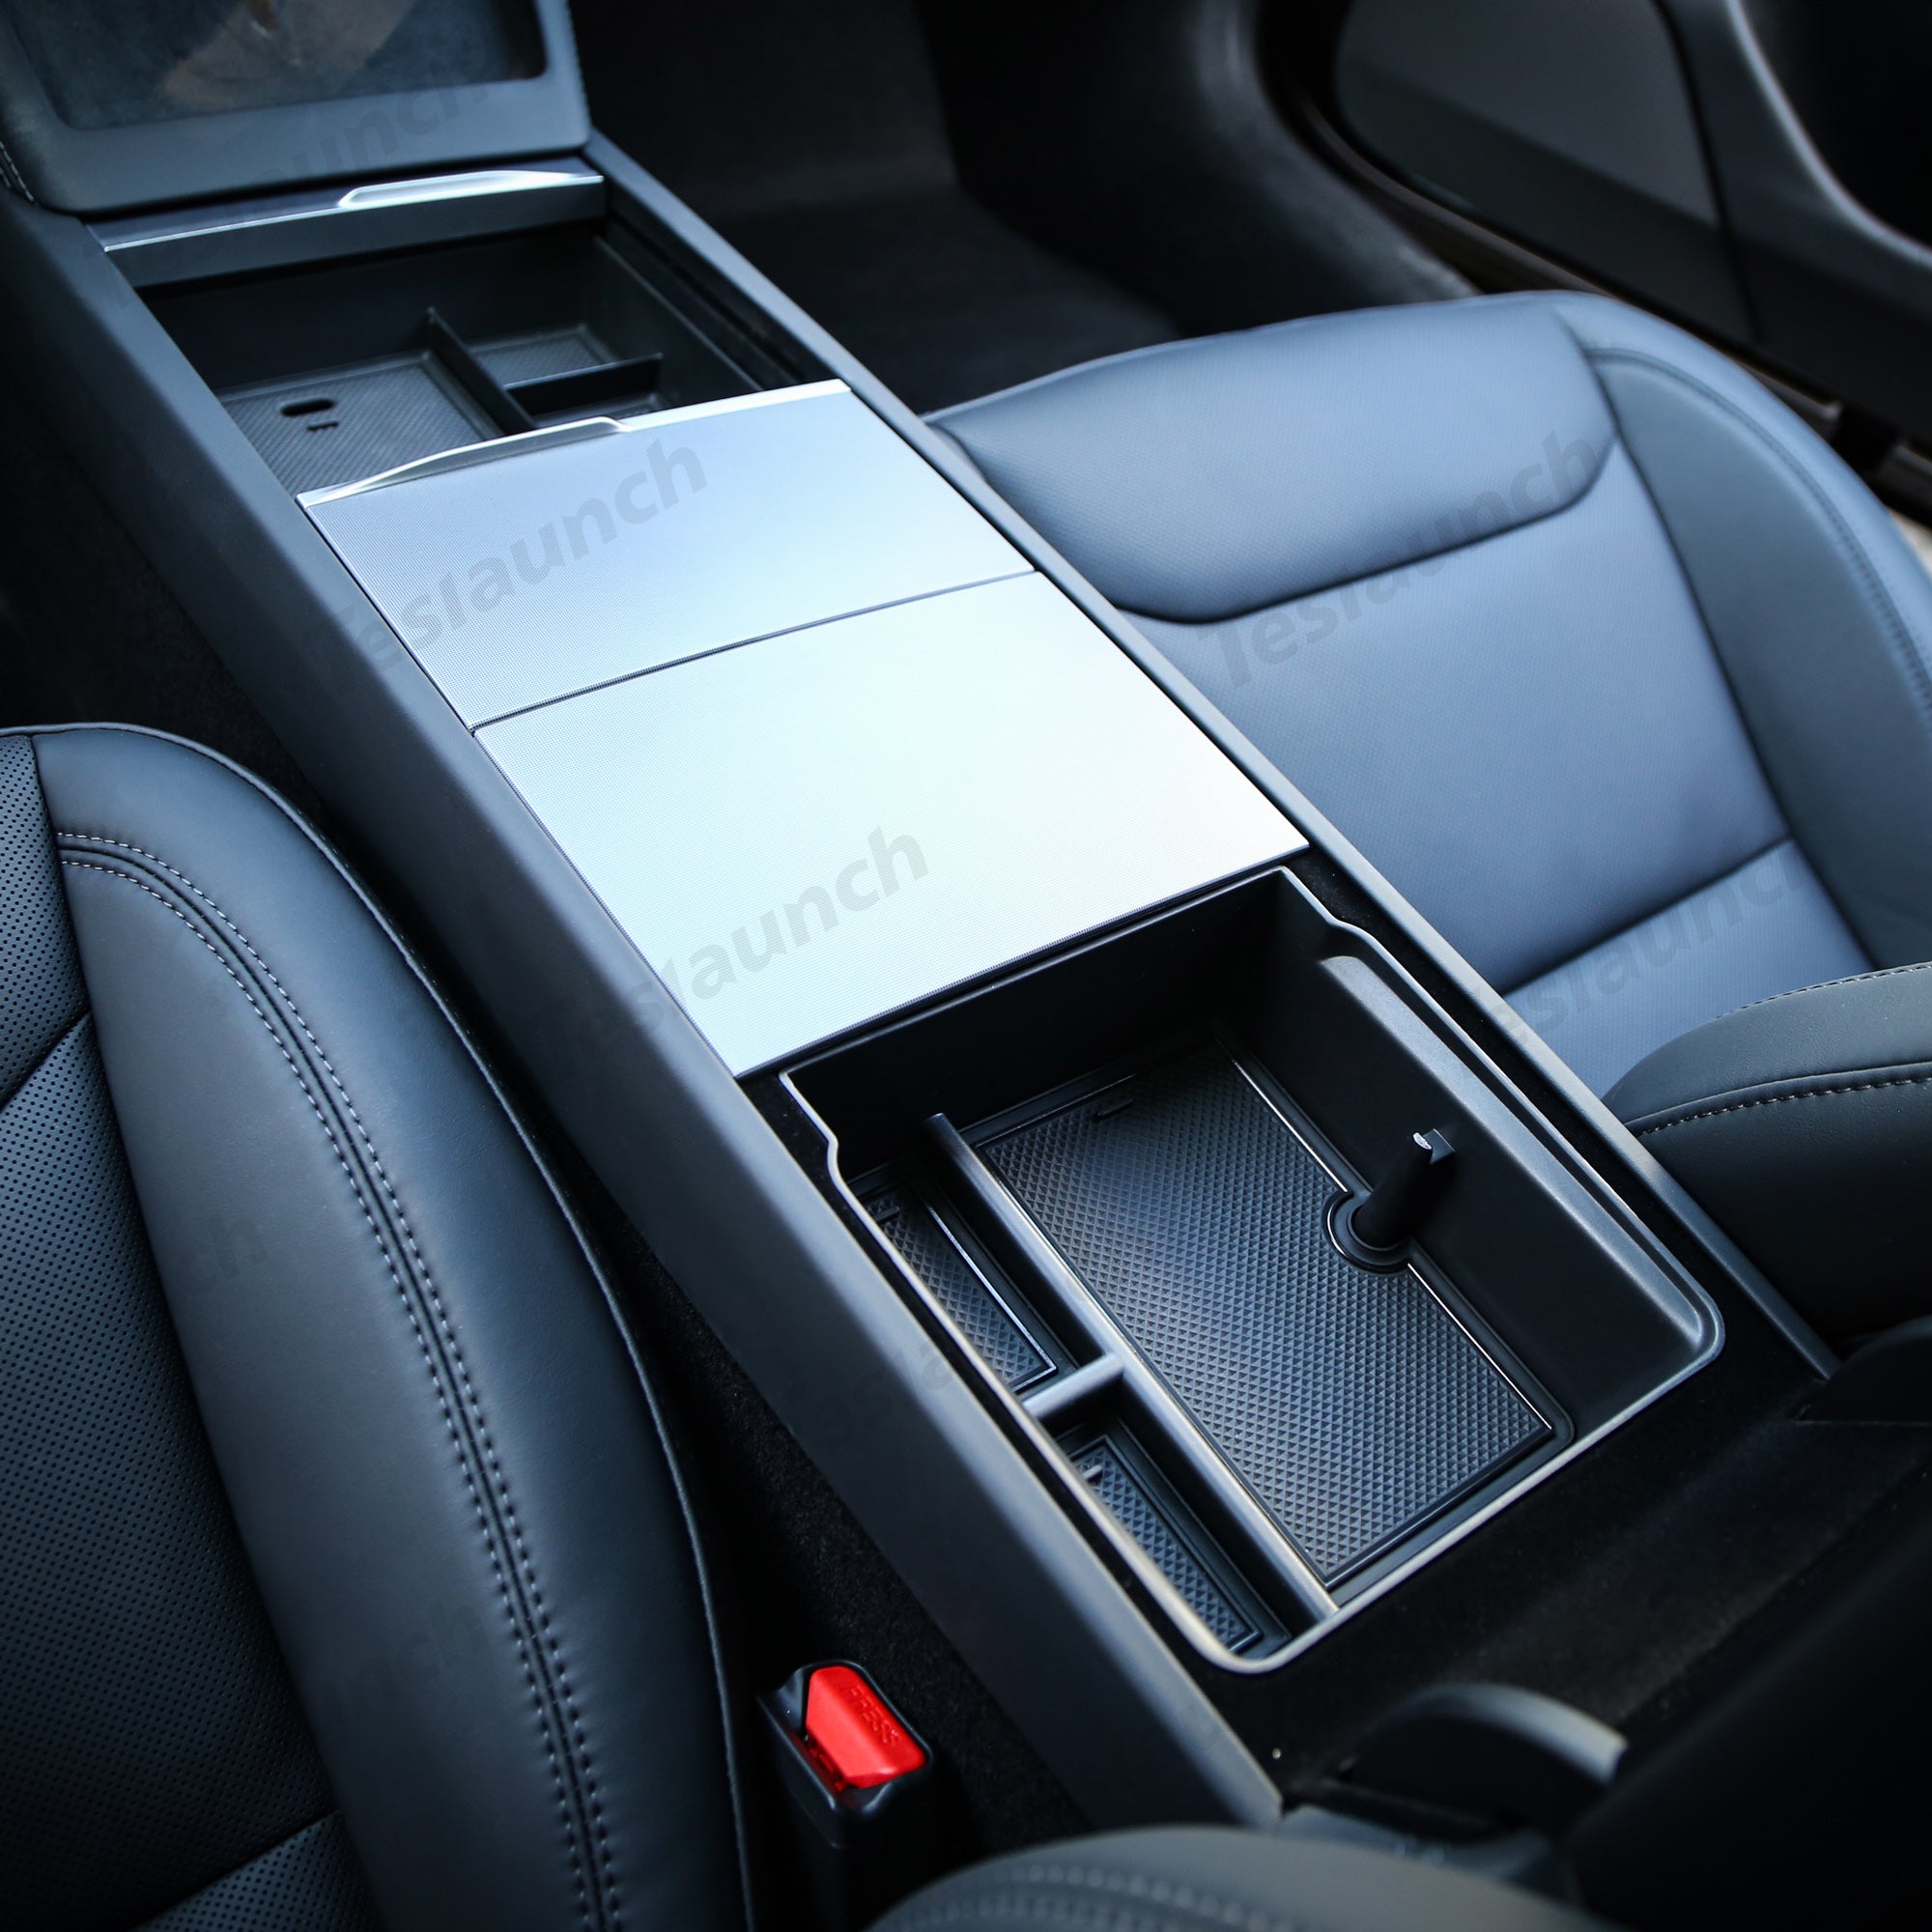 Center Console Organizer and Armrest Box for Tesla 2024 Model 3 Highland -  central control + armrest box storage box